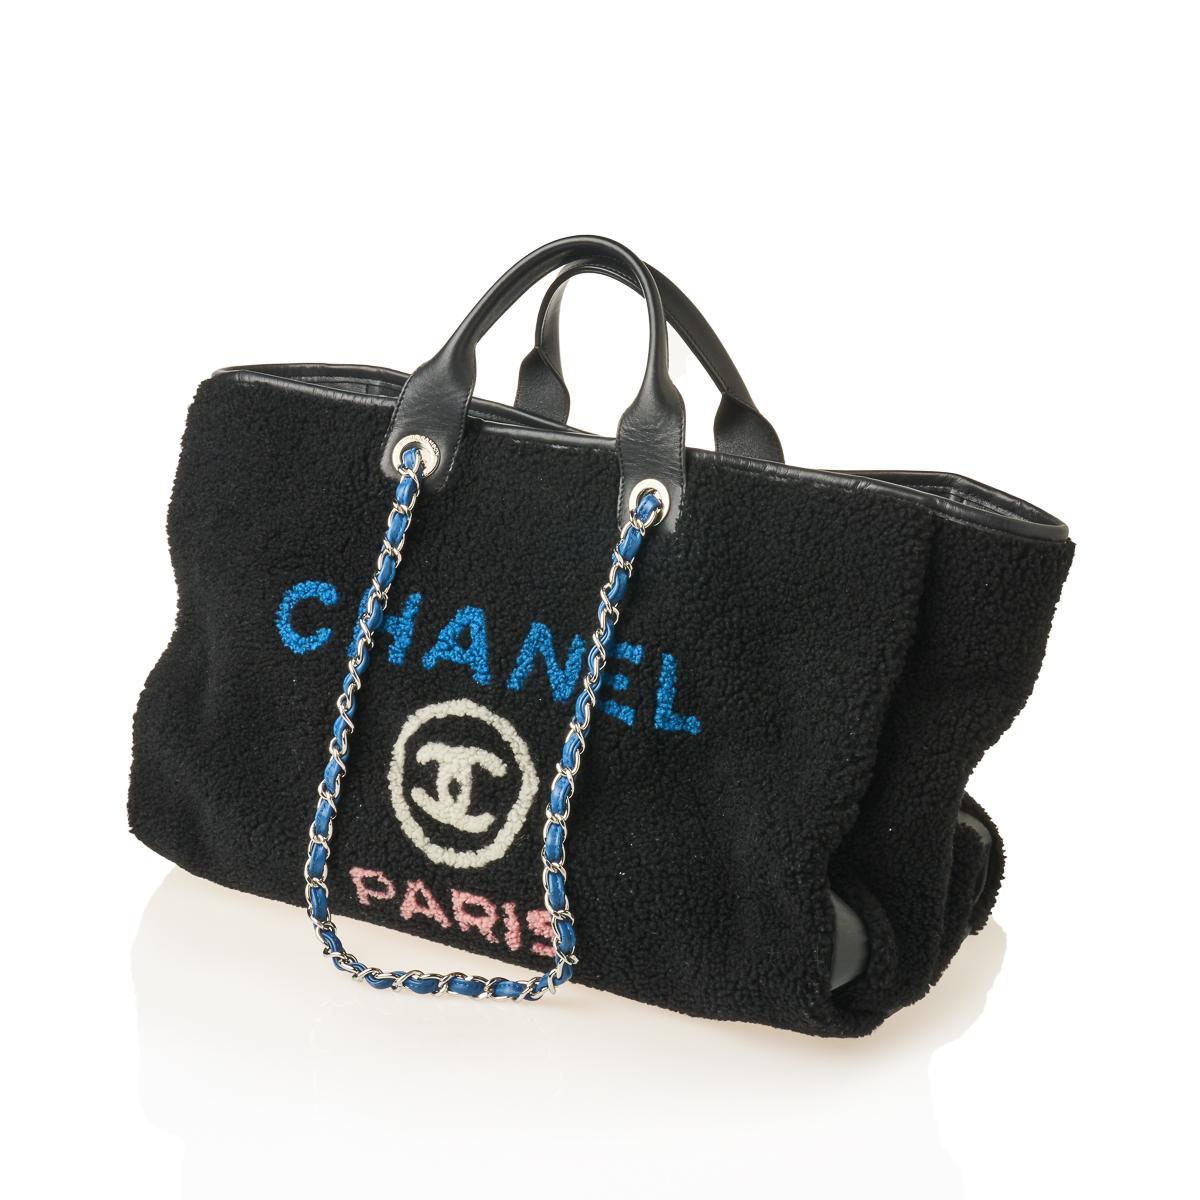 PENDING -100% Brand New Authentic CHANEL executive Medium Cerf Tote Bag